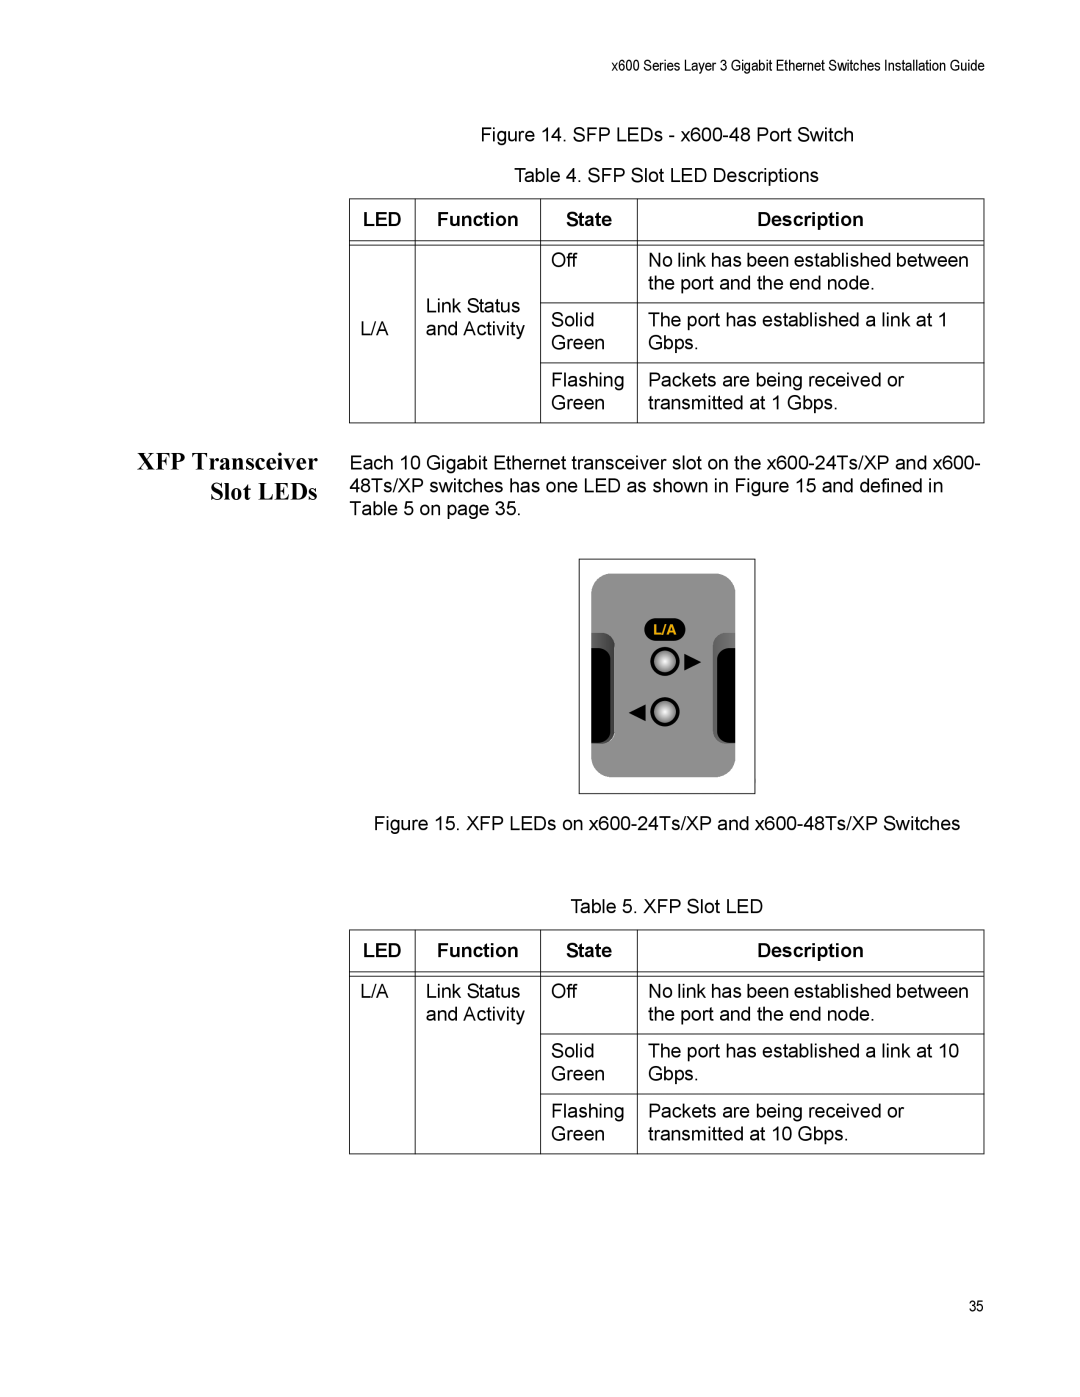 Allied Telesis x600-24Ts-POE manual XFP Transceiver Slot LEDs, Function, State, Description 